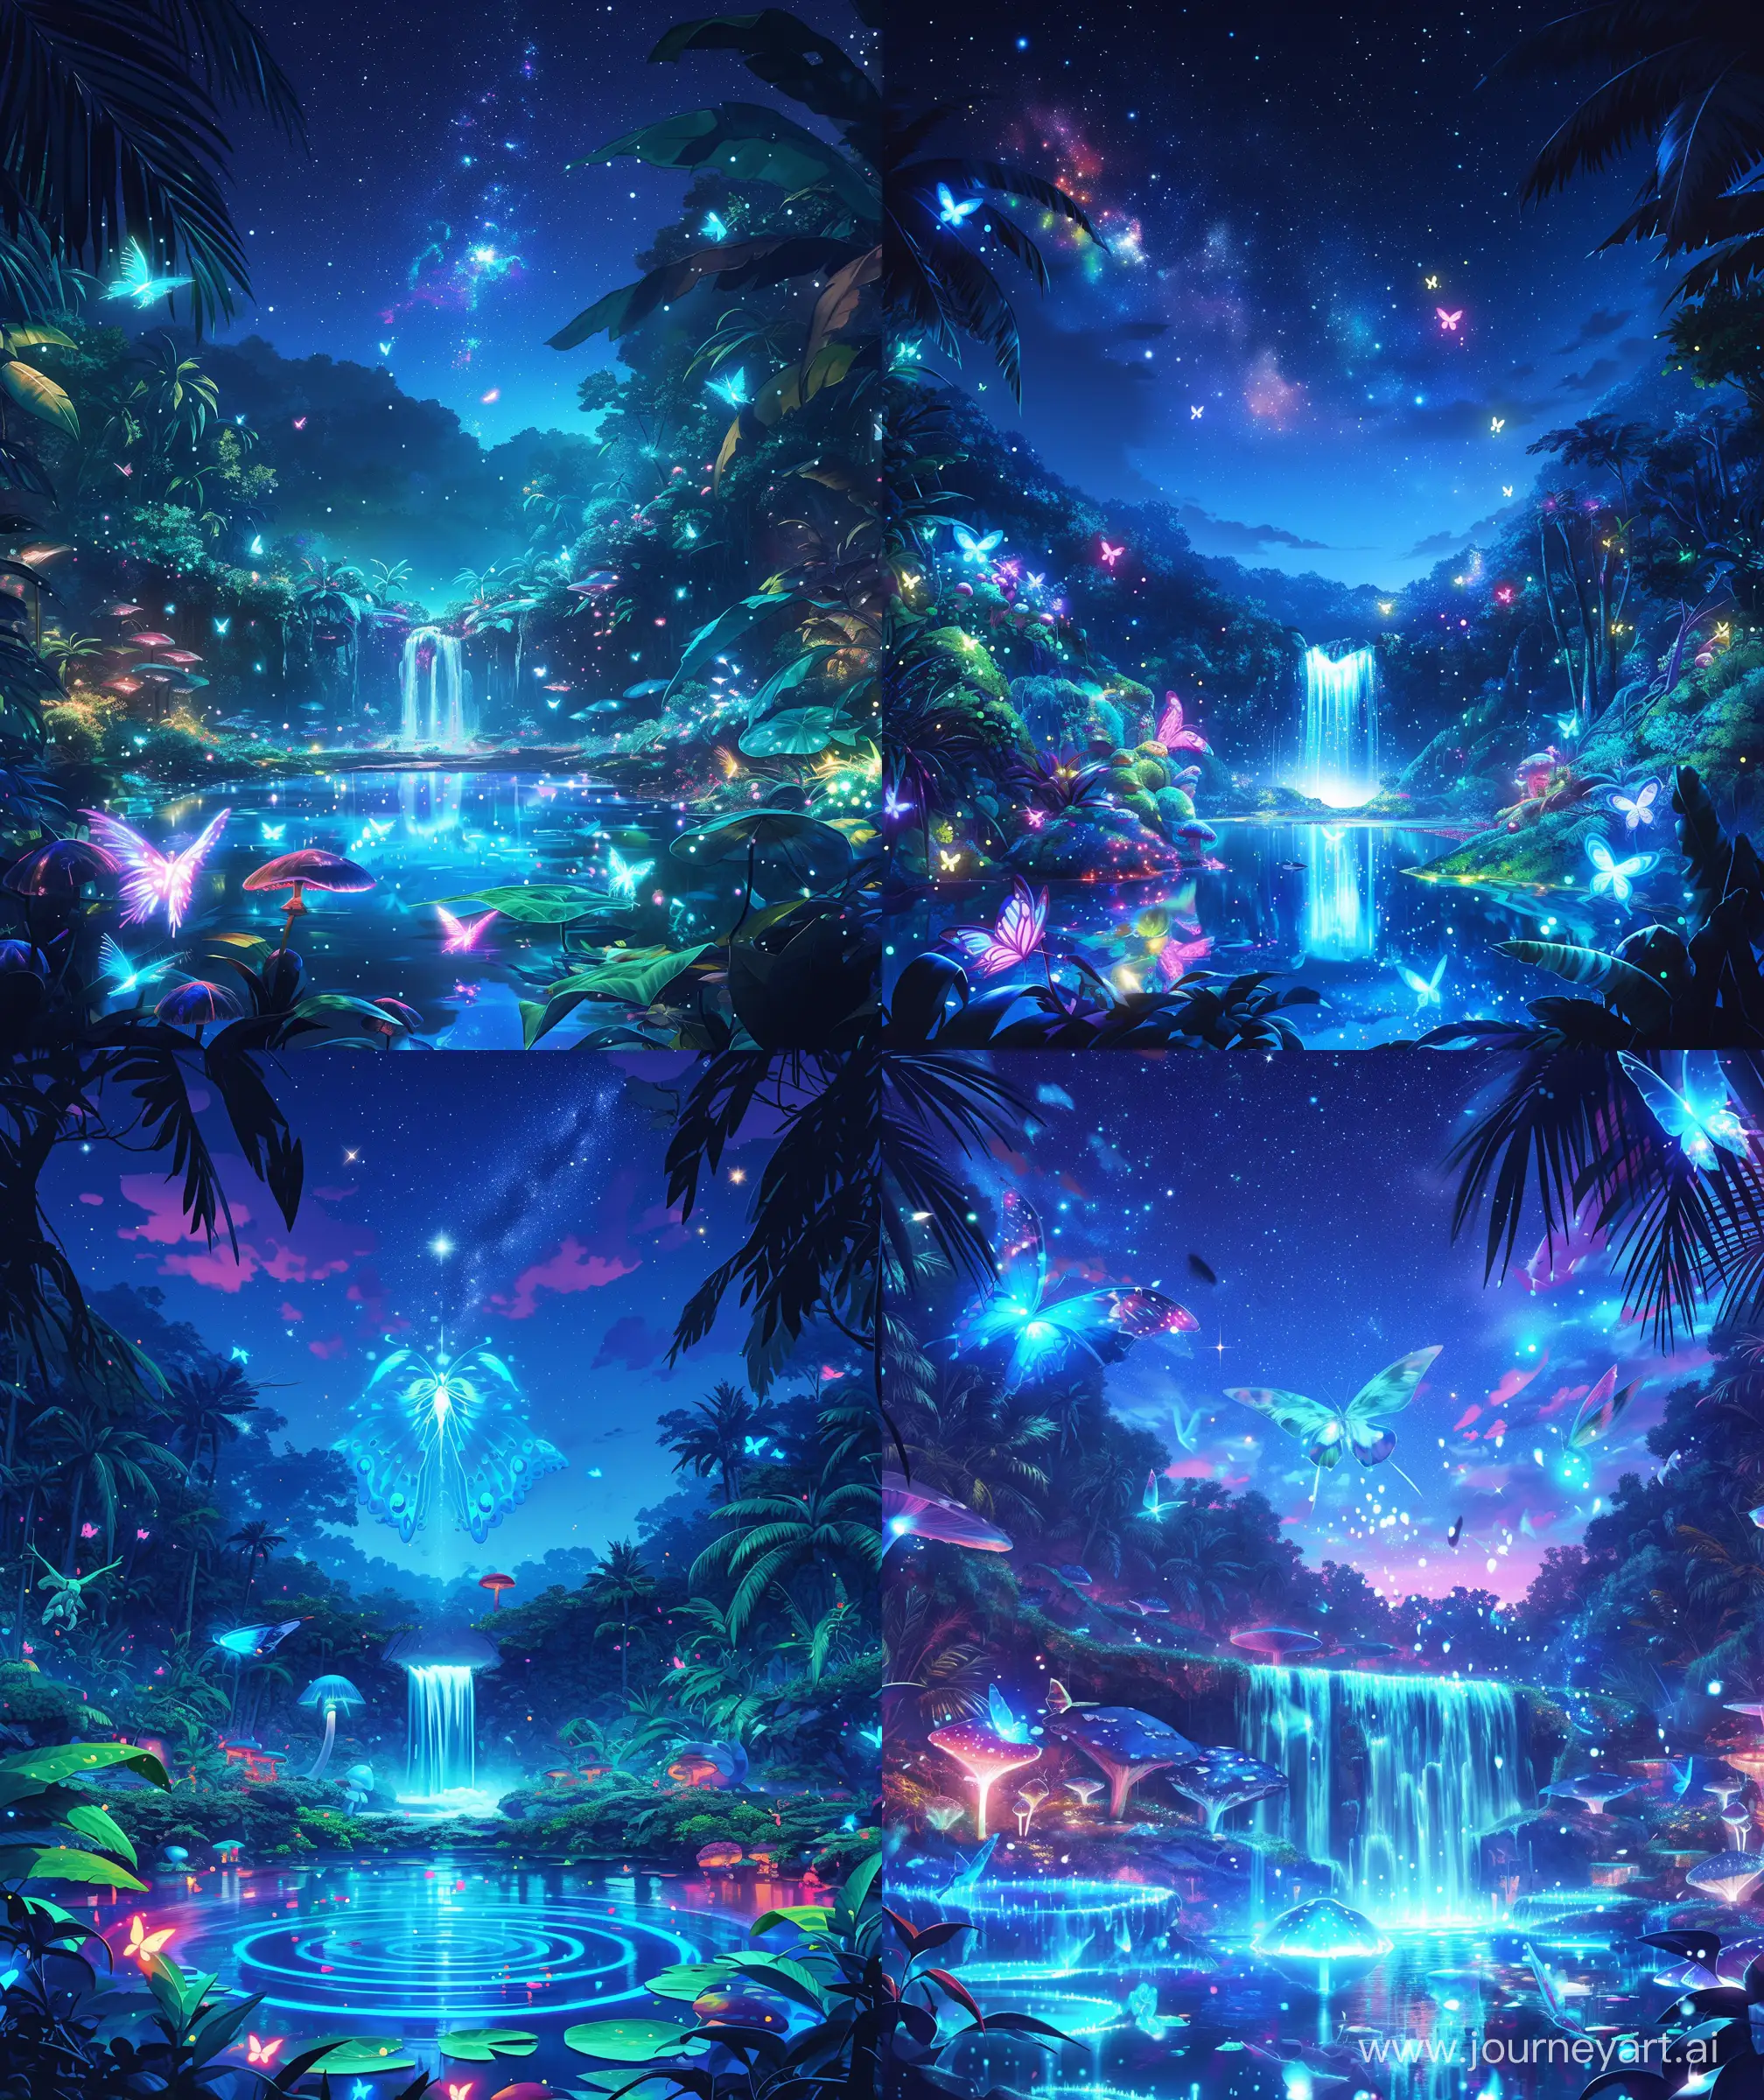 Ethereal-Bioluminescent-Jungle-Oasis-Mokoto-Shinkai-Style-Anime-Artwork